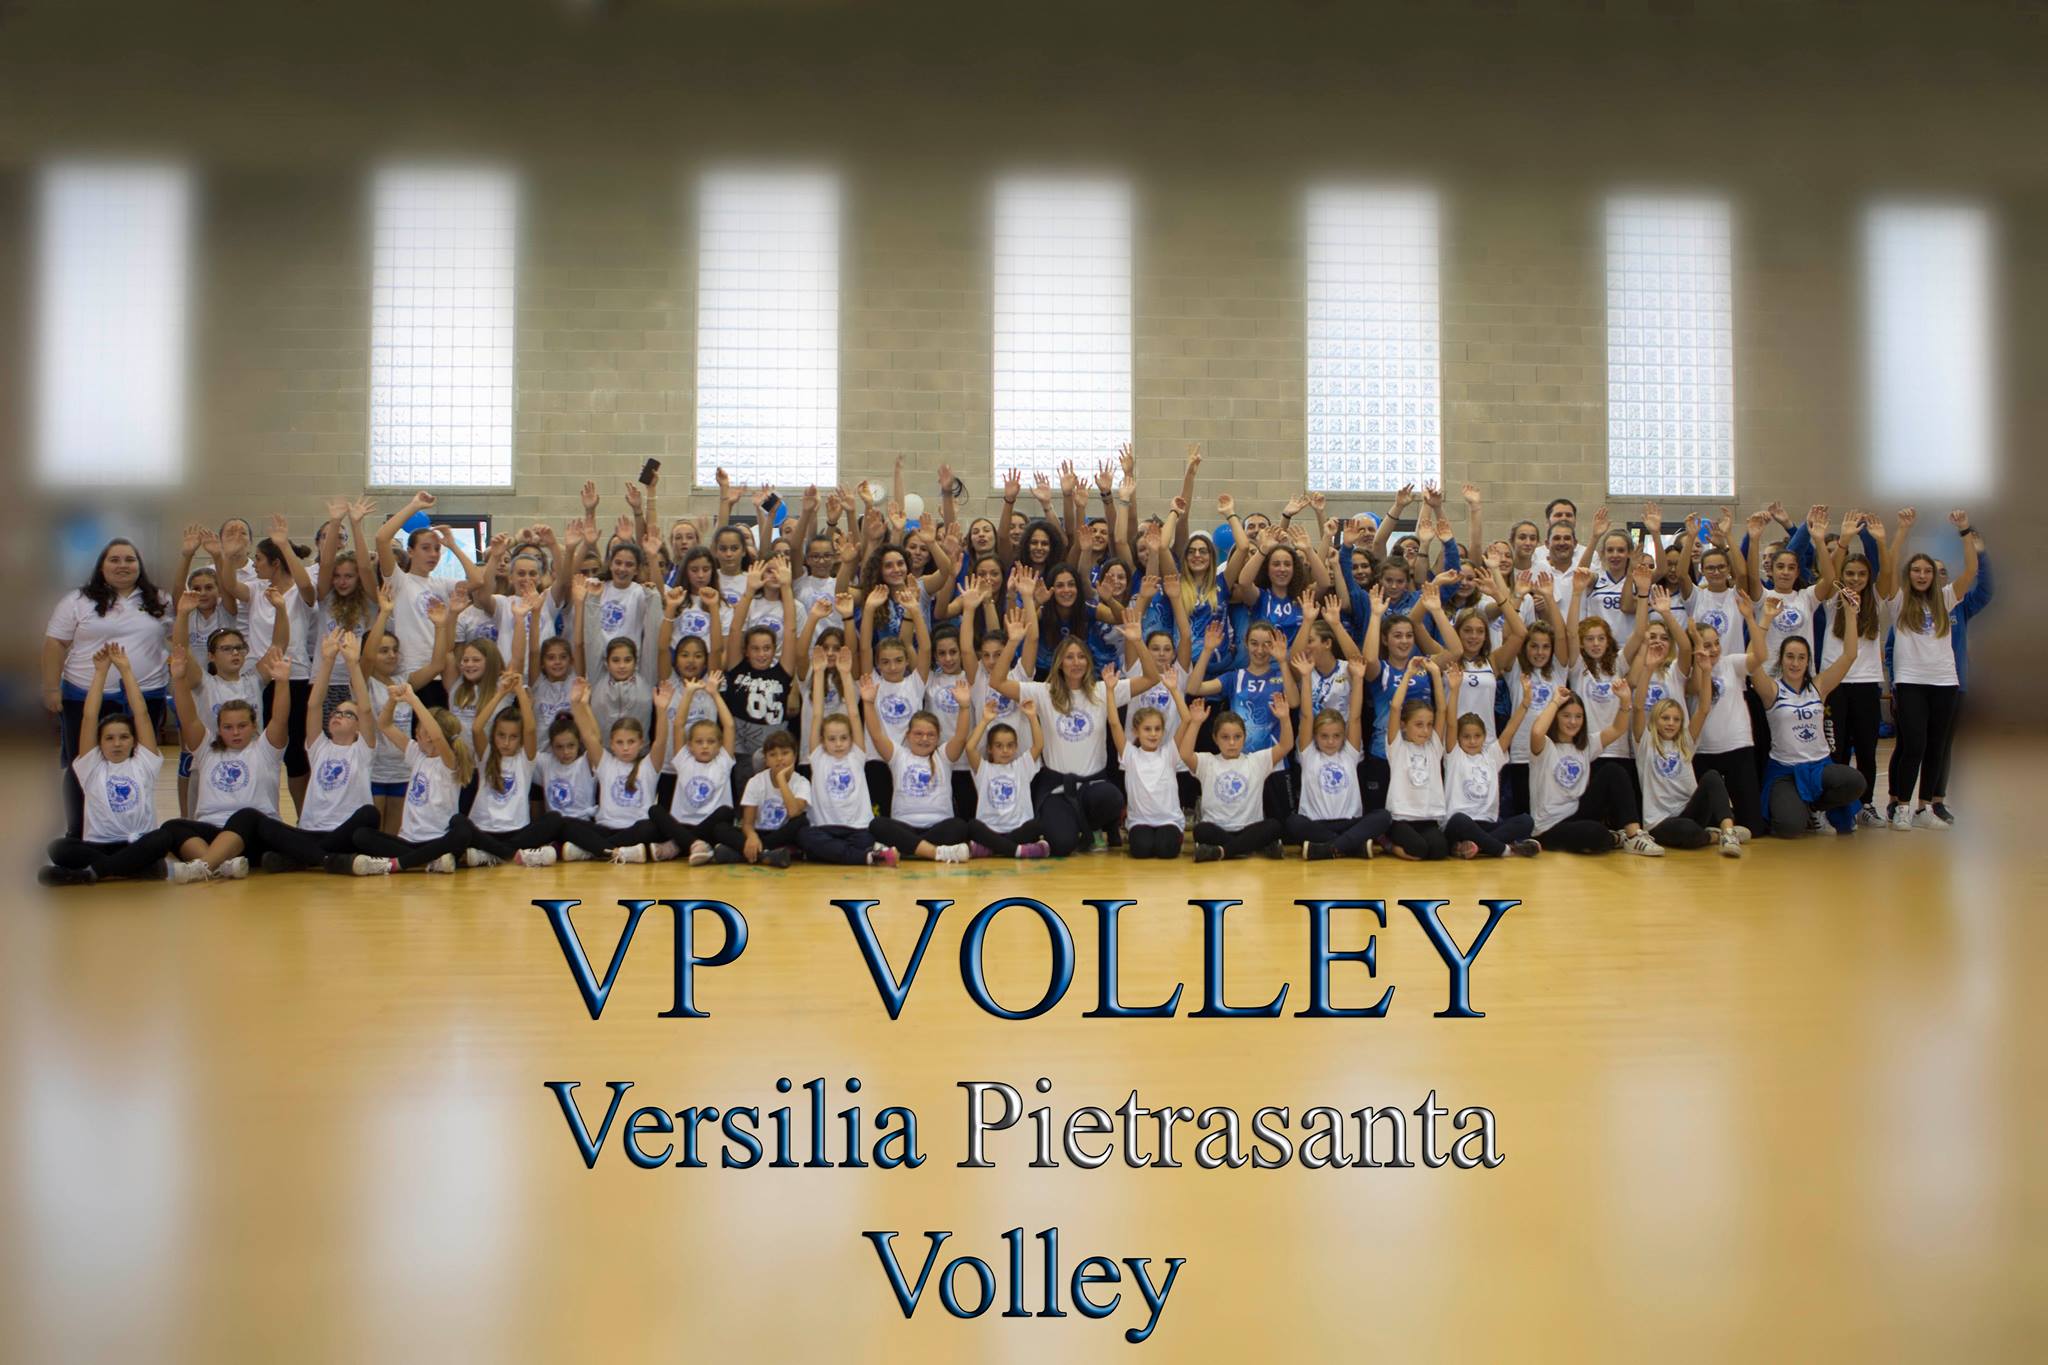 Pallavolo Pietrasanta e pallavolo Versilia insieme formano la VP Volley